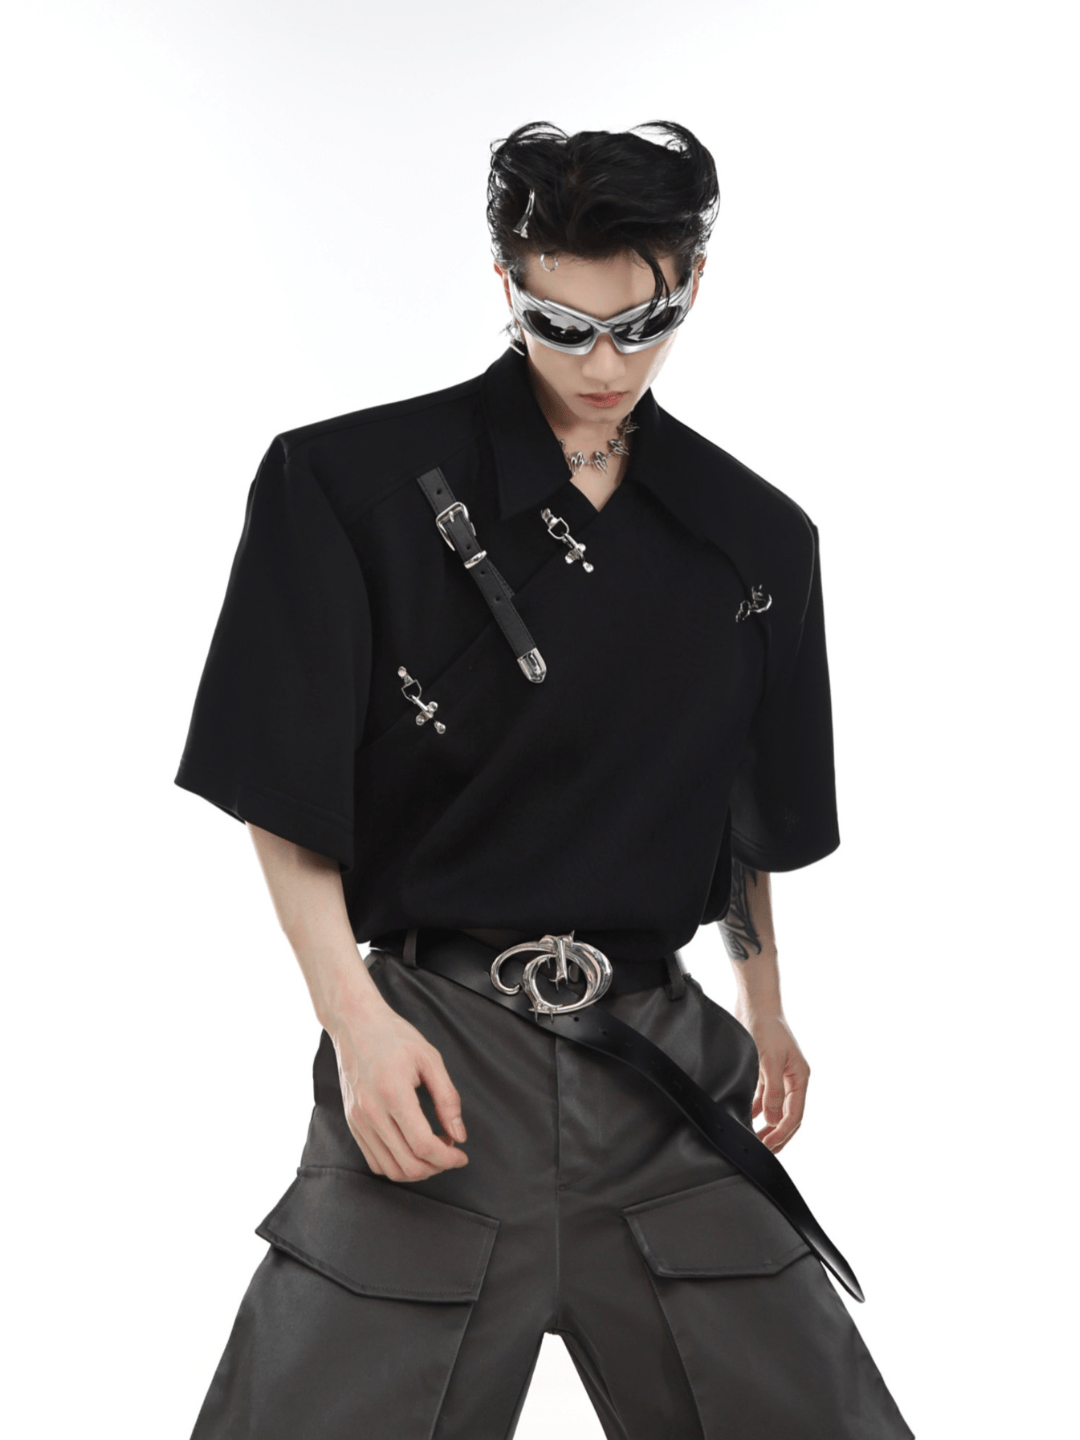 【CulturE】Metal Belt Buckle Design T-Shirt na1303